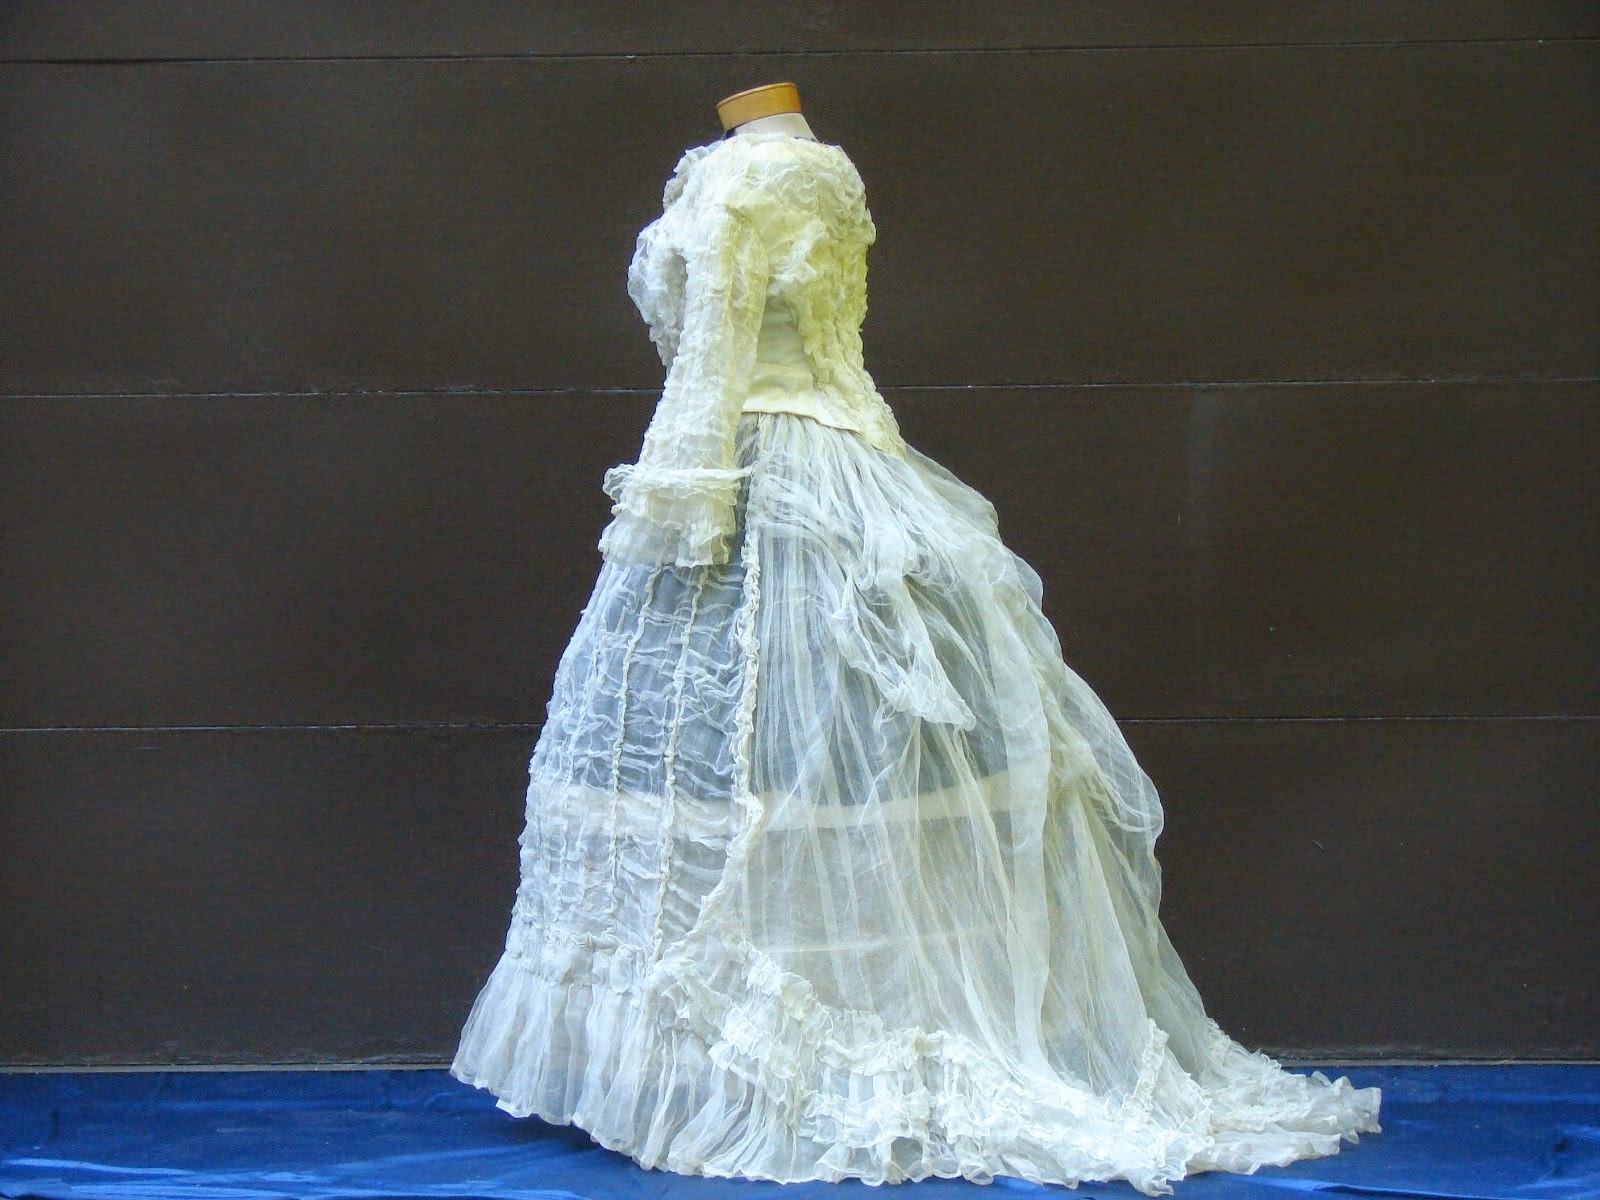 All The Pretty Dresses: 1870's Sheer Bustle Era Dress